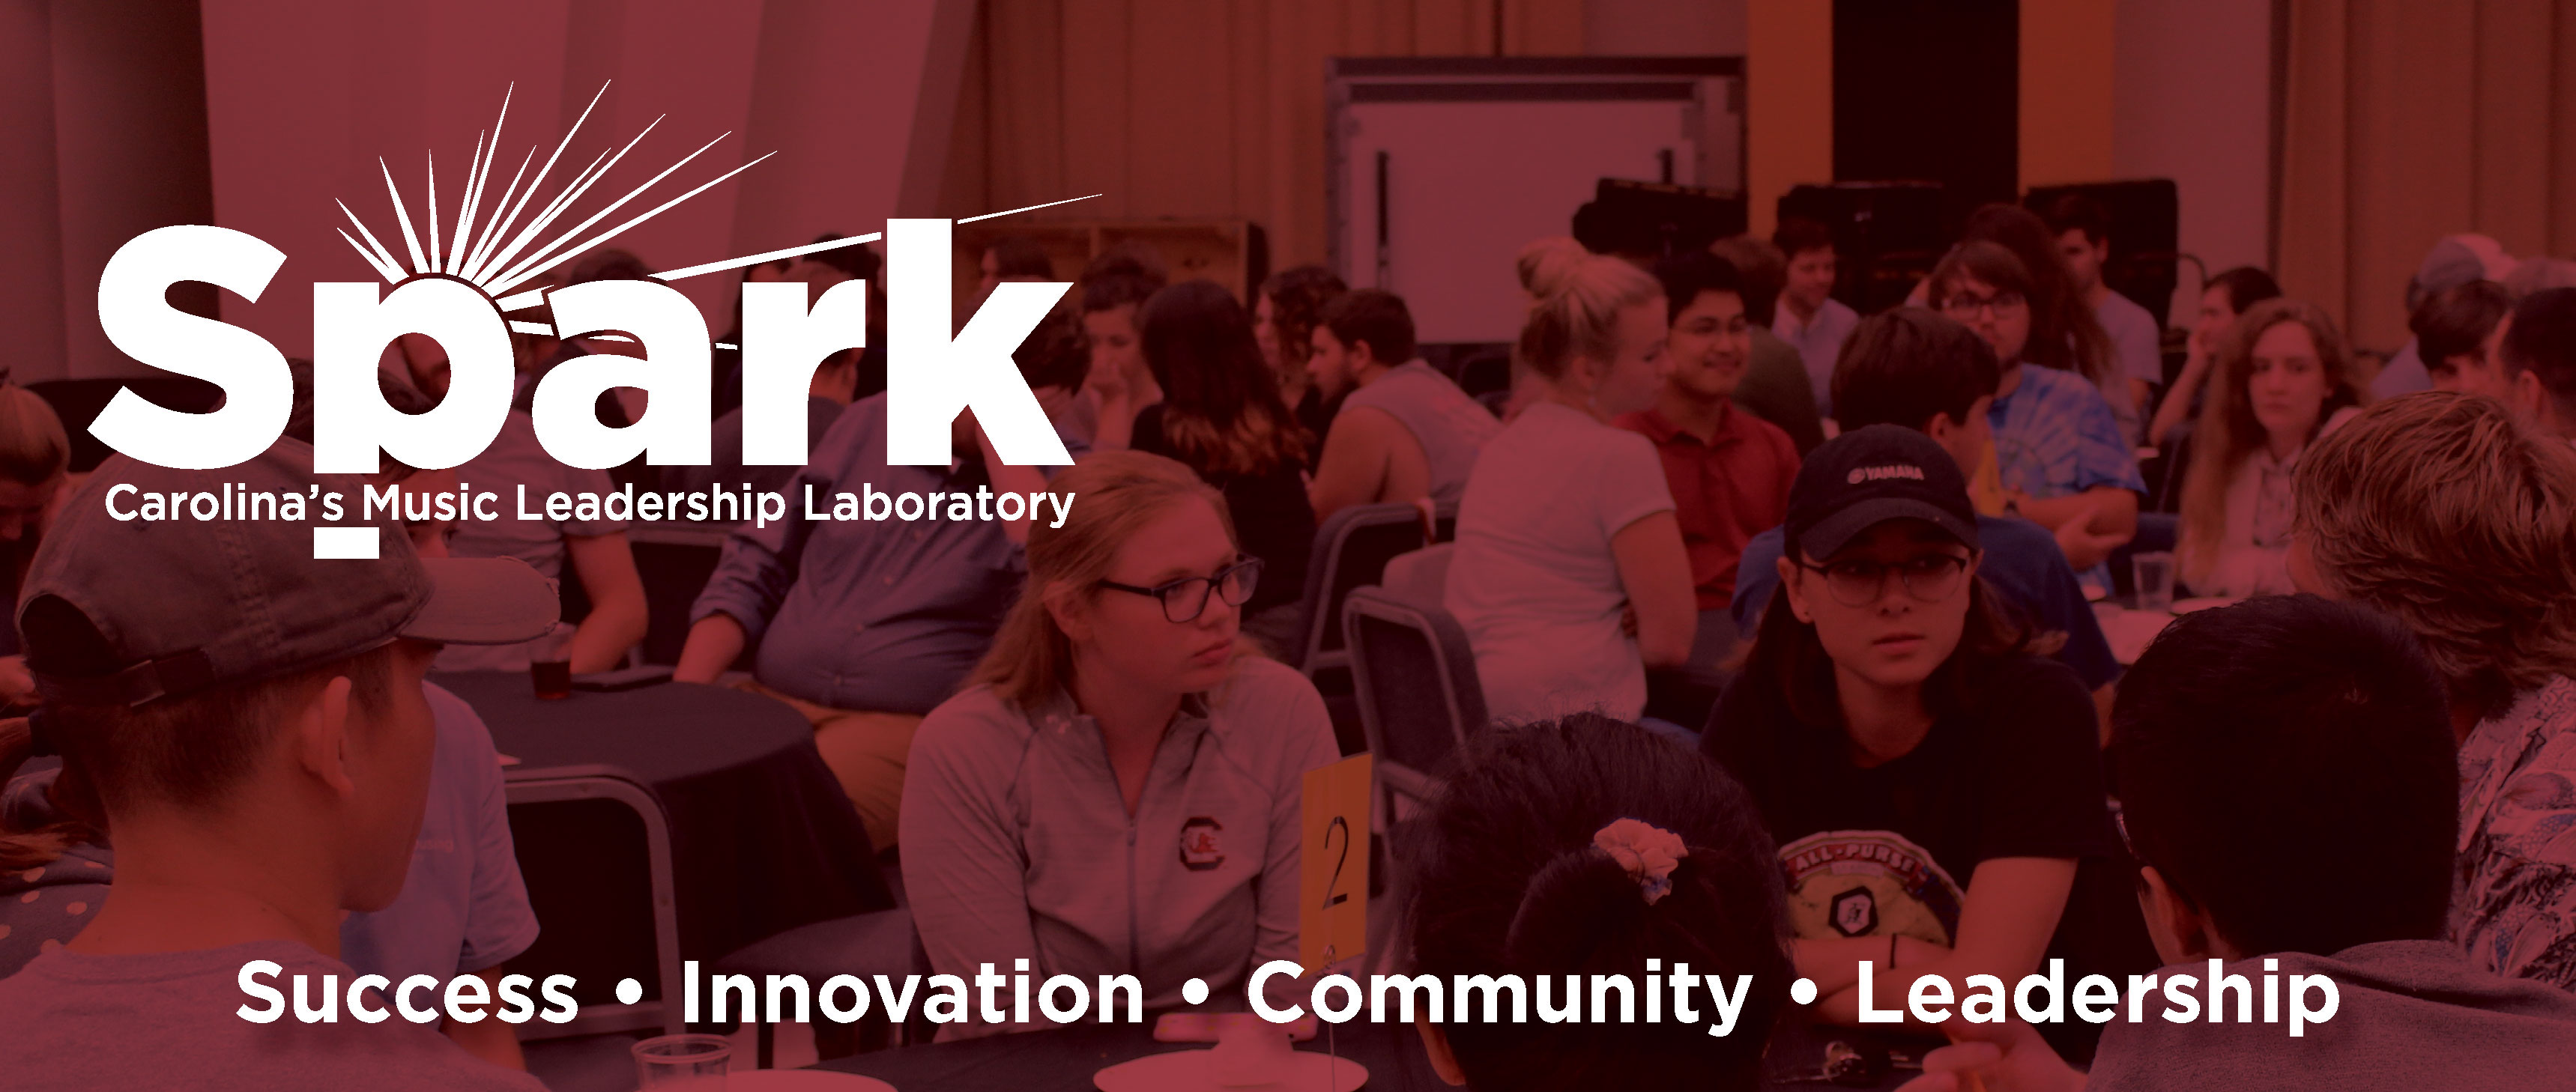 Spark: Carolina's Music Leadership Laboratory